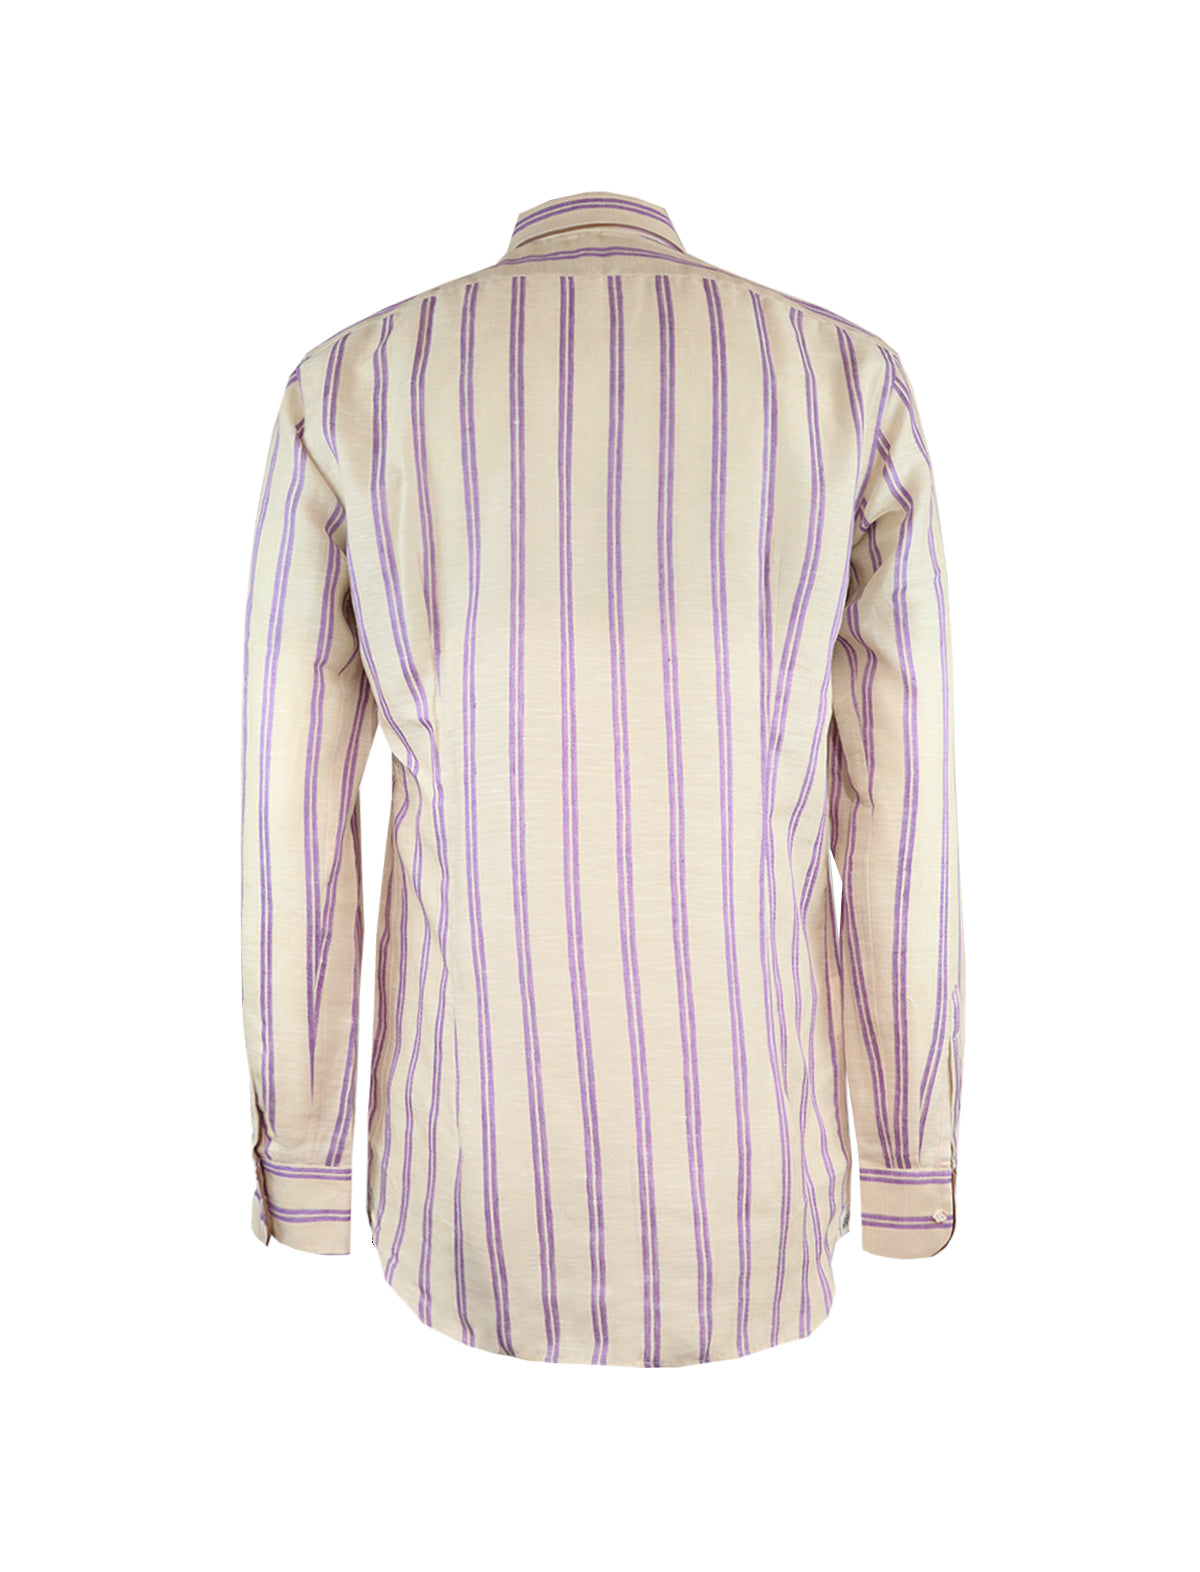 Gabriele Pasini Flax Striped Shirt in Khaki/Purple